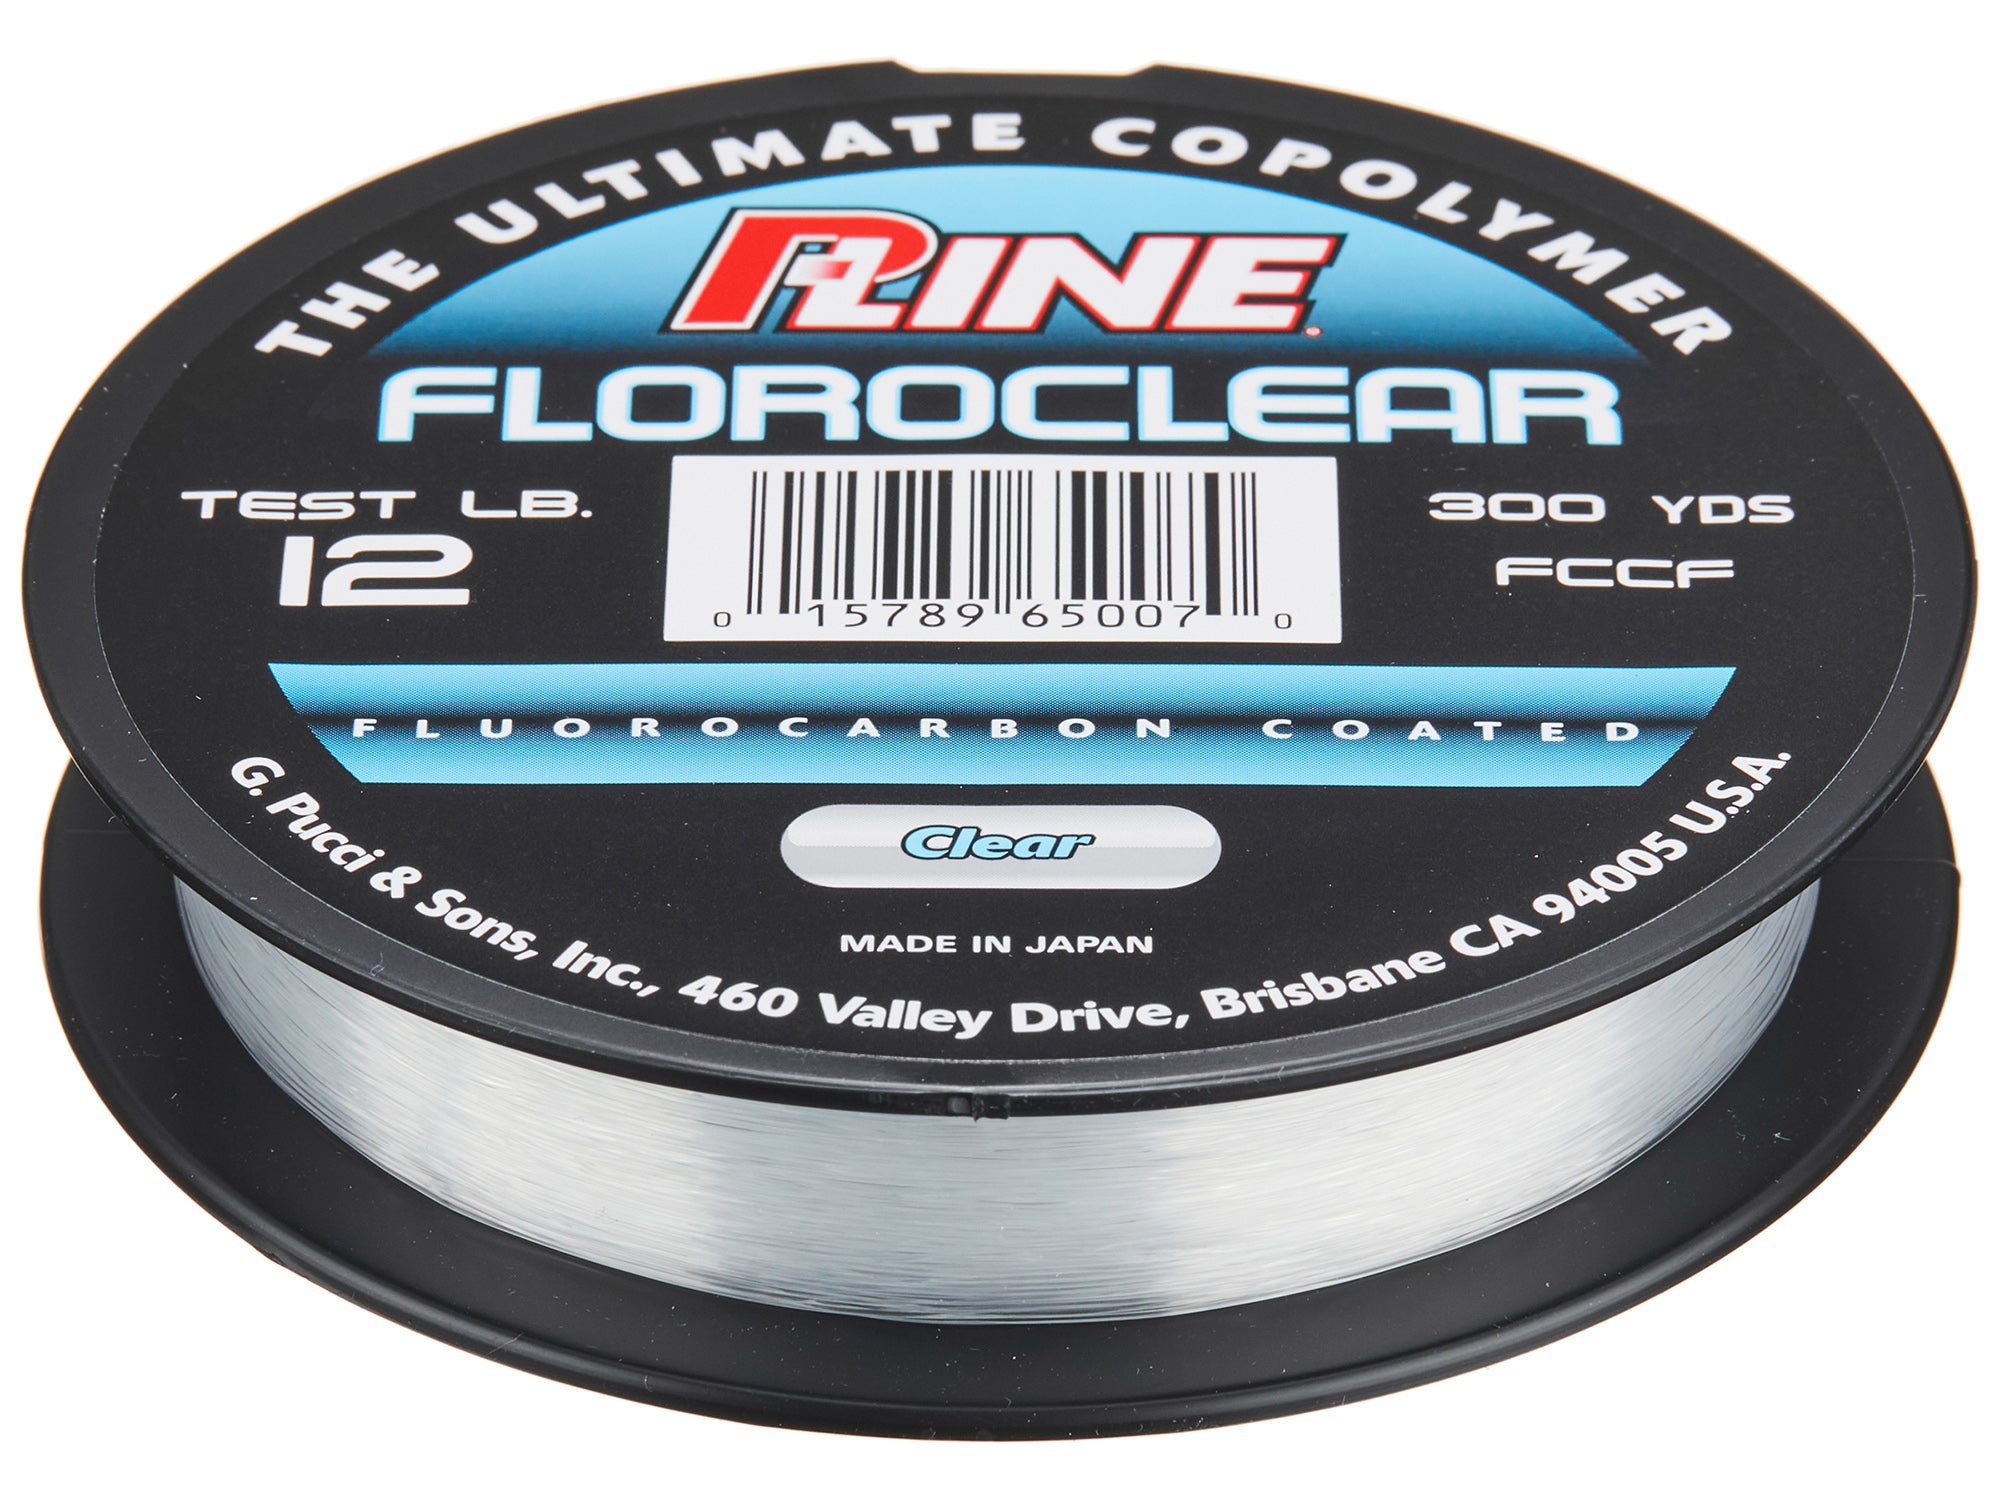 Fluoro Coated P-Line Floroclear Fishing Line 25 # Test Mist Green 260 Yards 